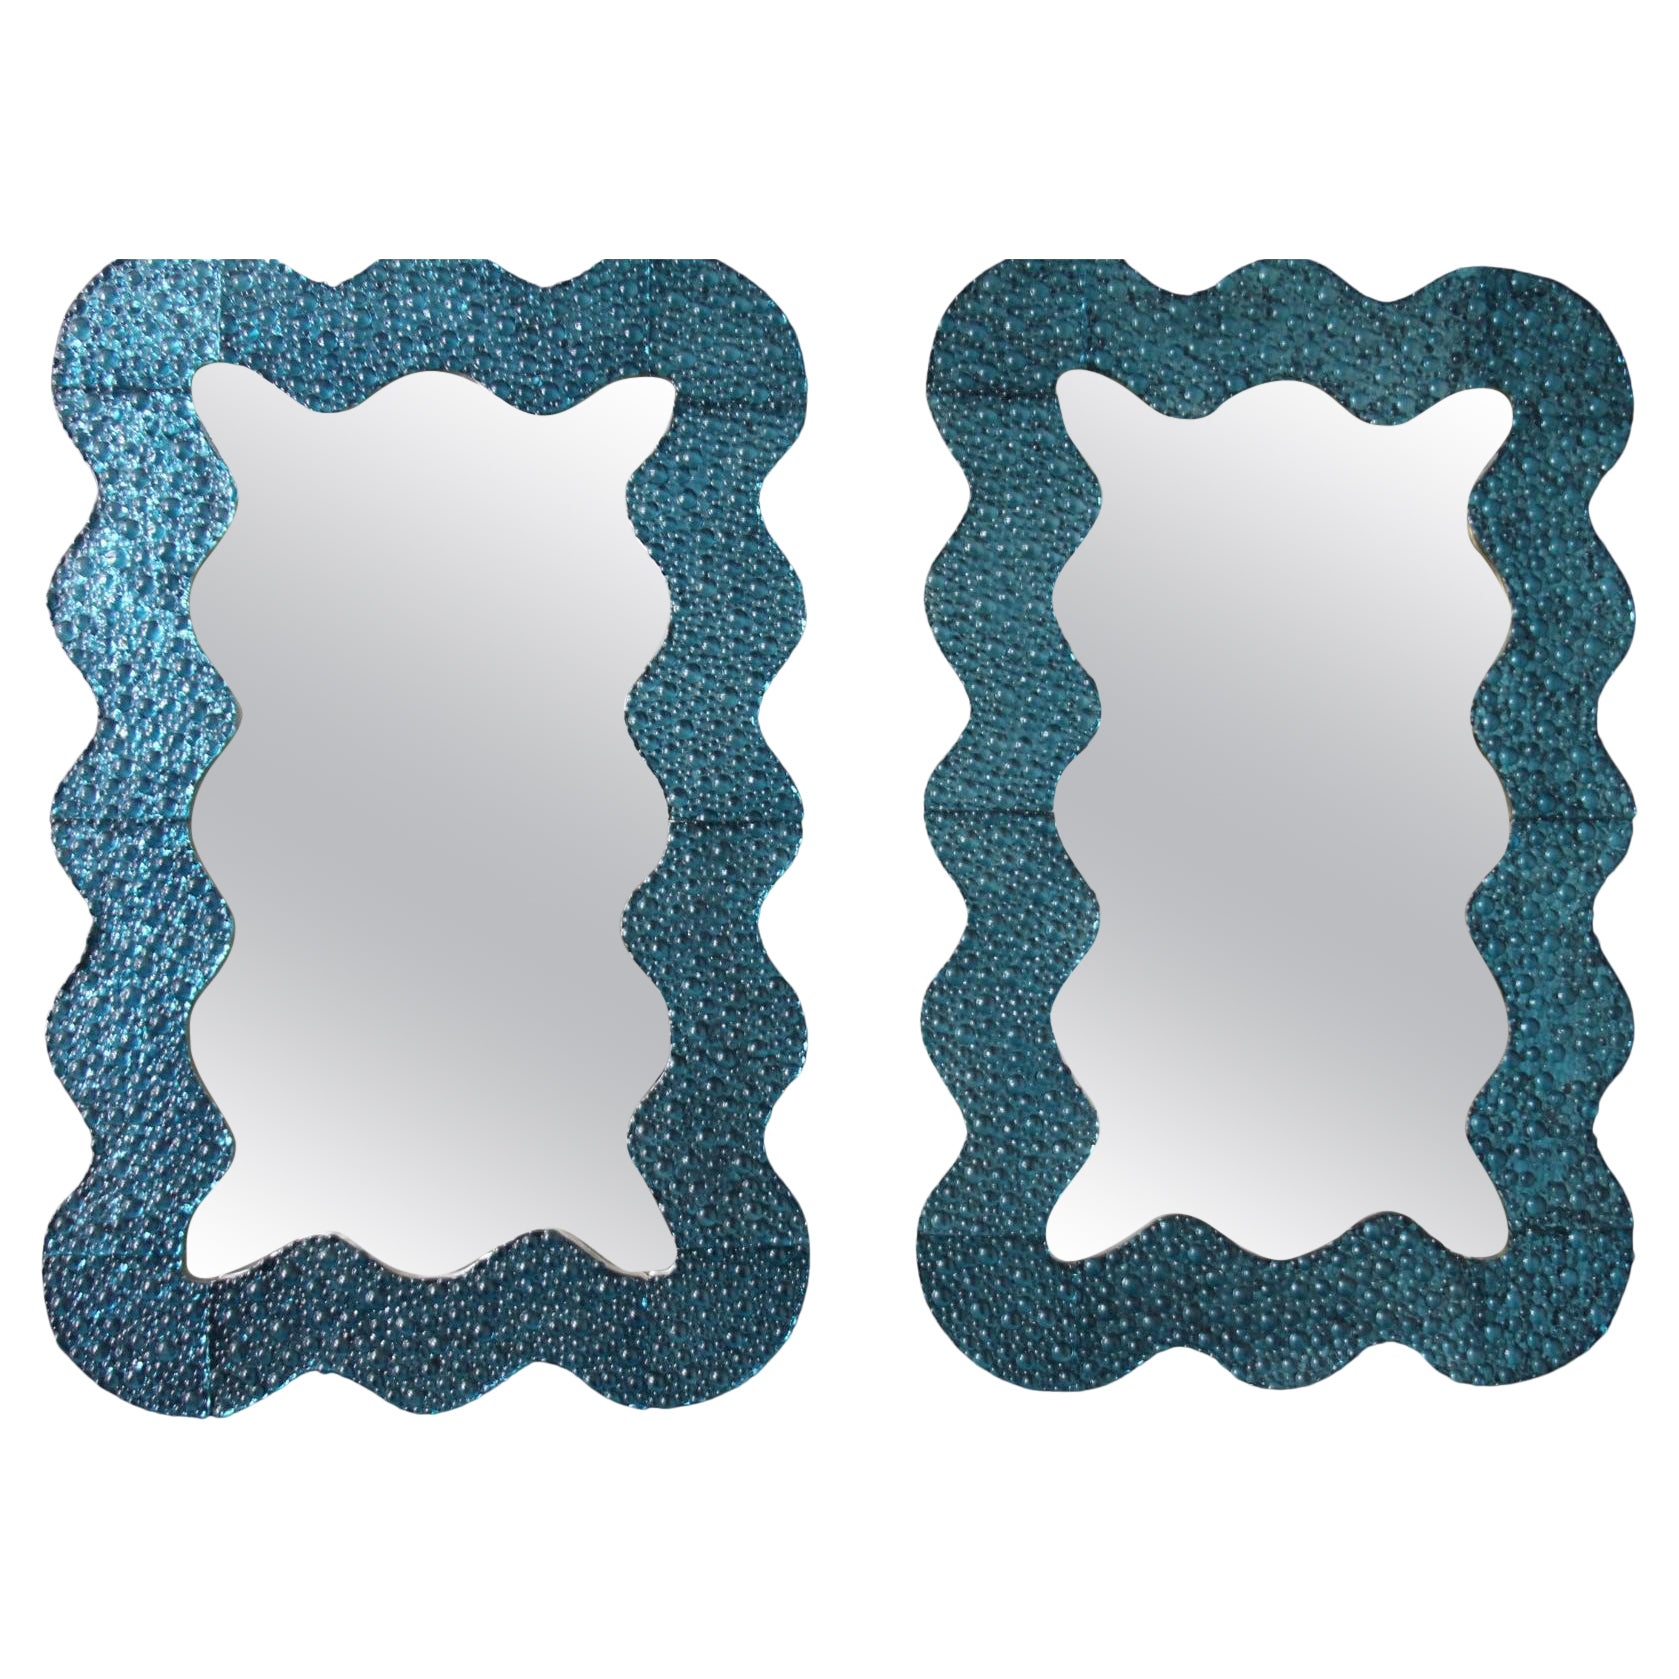 Grands miroirs en verre de Murano texturé bleu turquoise ondulé, en stock